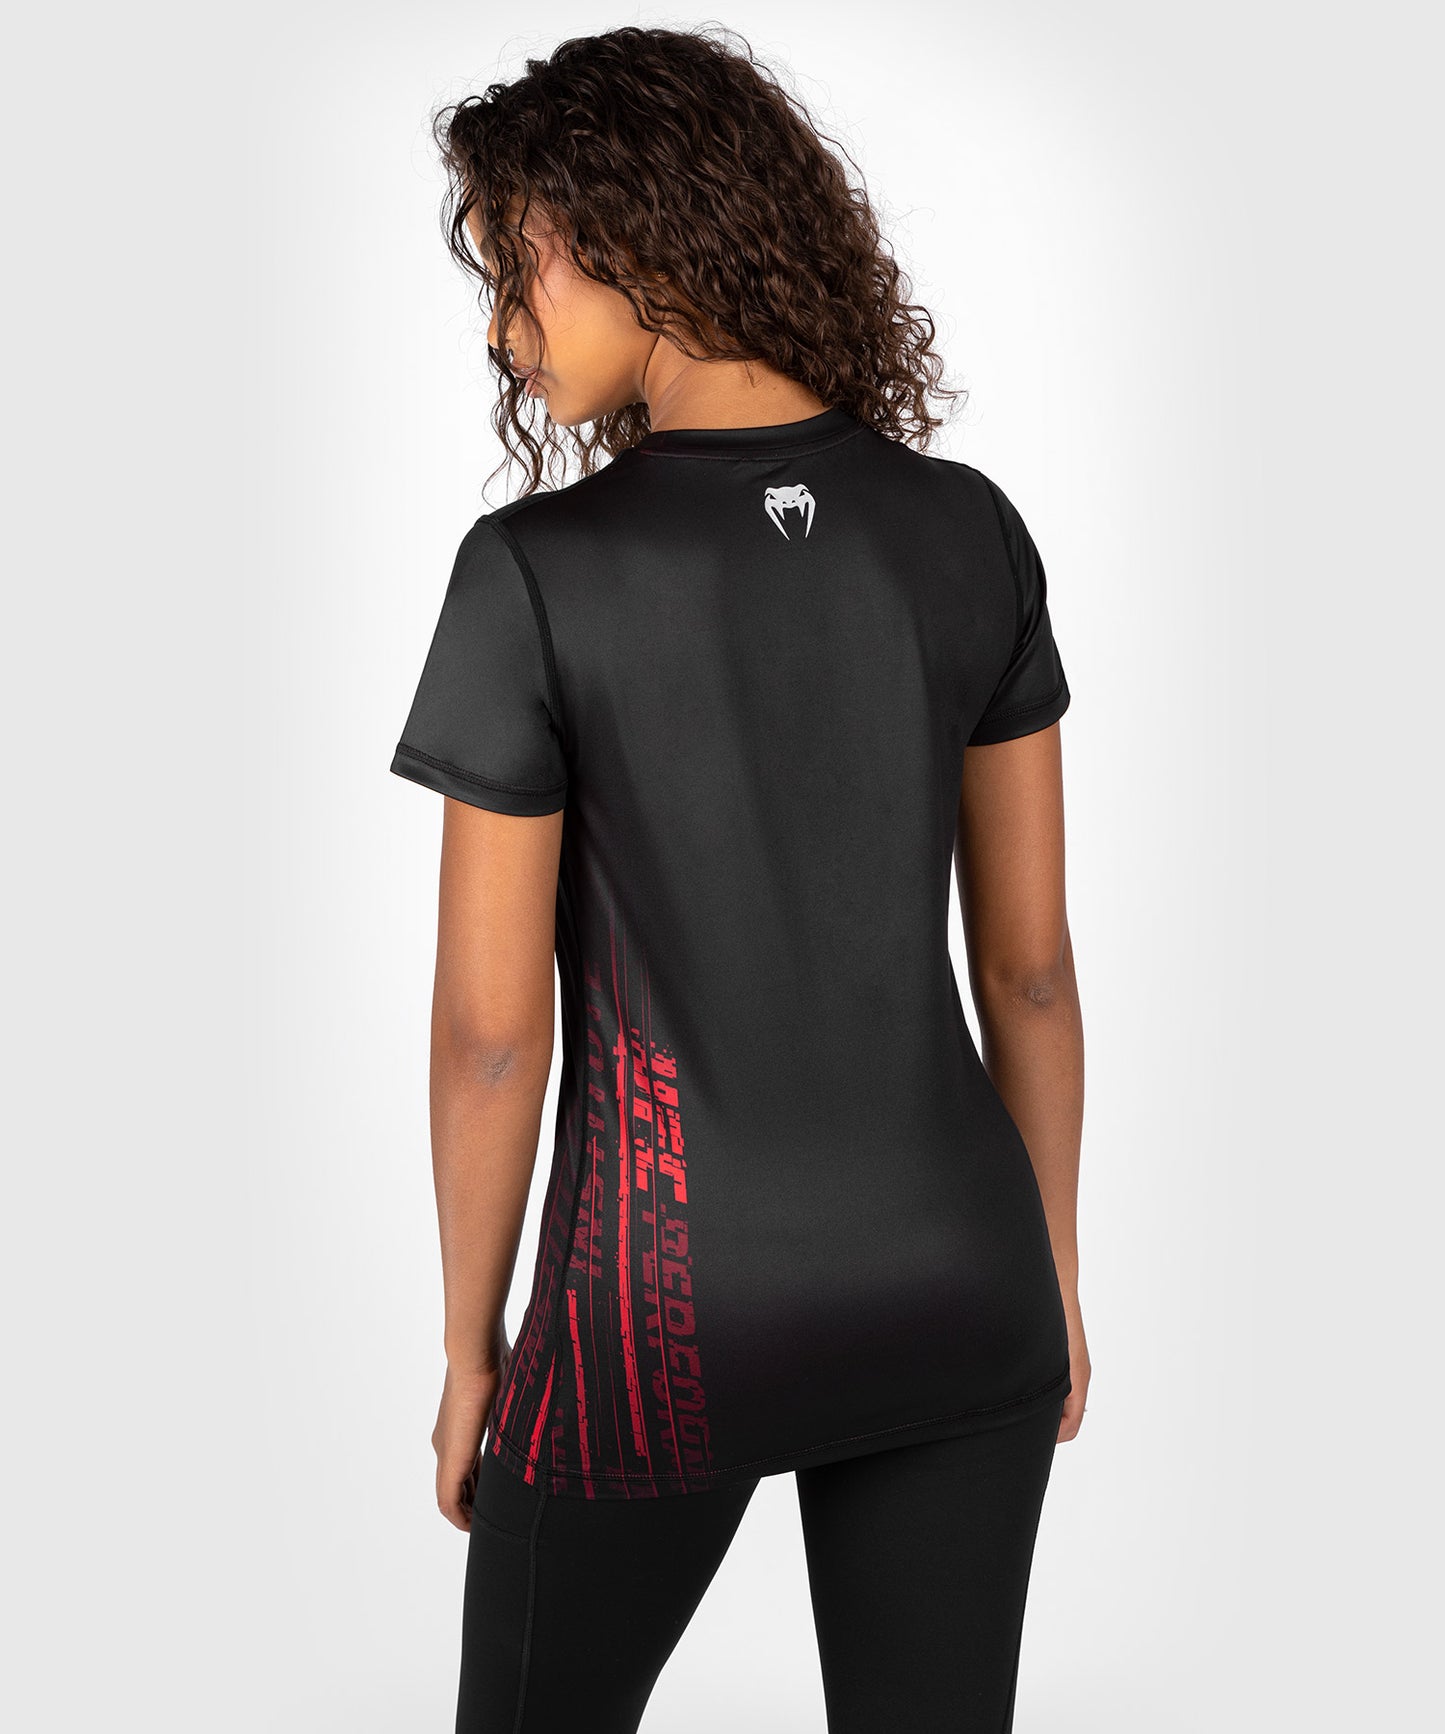 UFC Venum Performance Institute 2.0 Women’s Dry-Tech Shirt - Black/Red